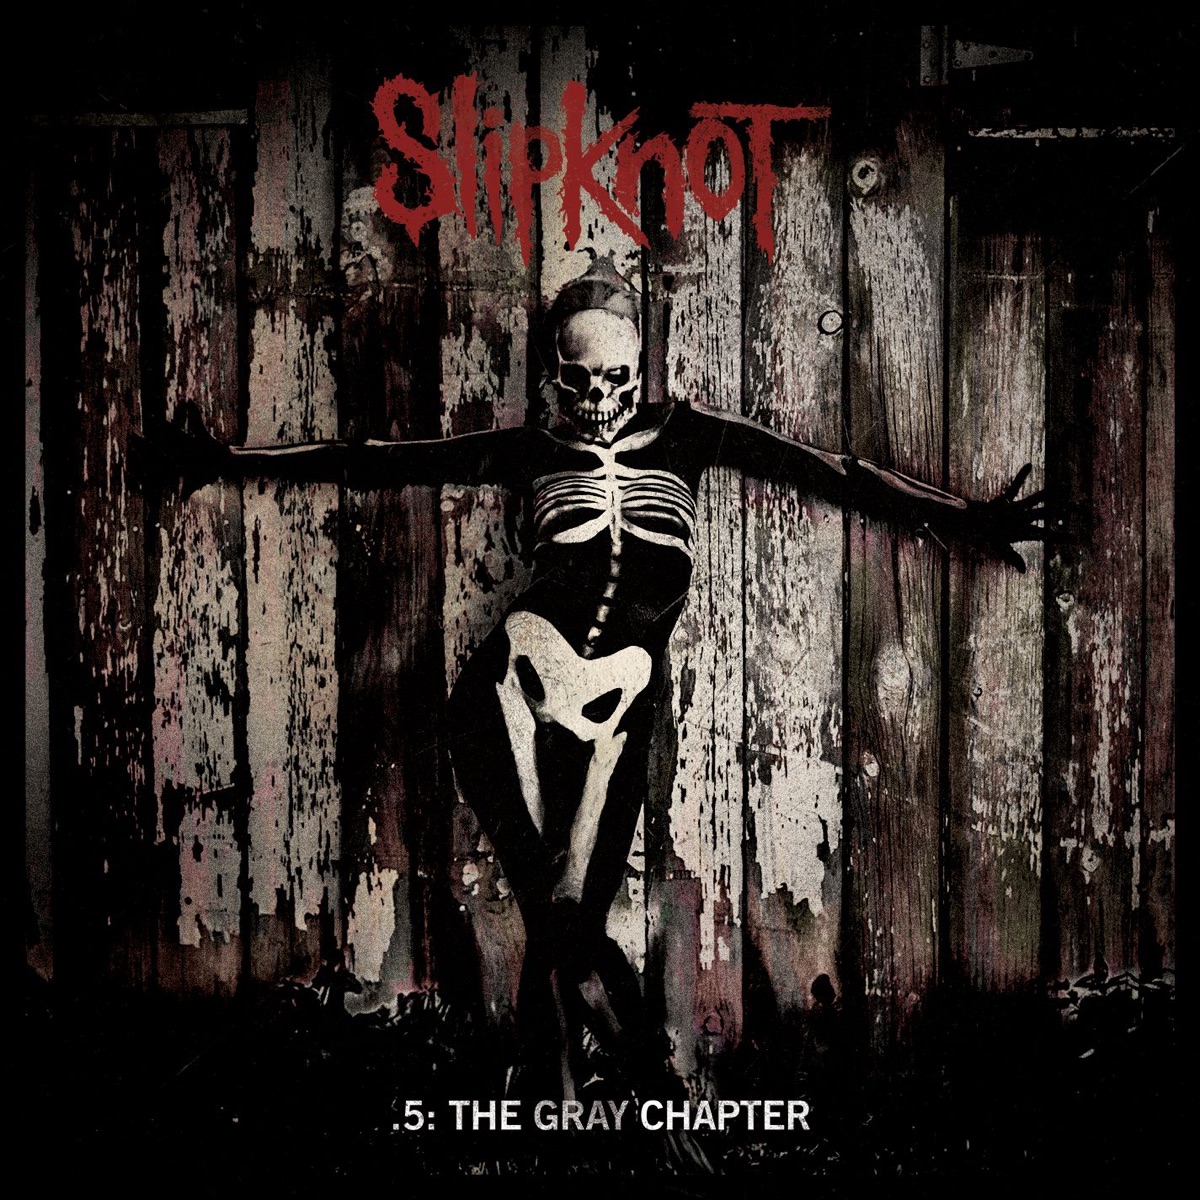 Vol. 3 The Subliminal Verses - Album by Slipknot - Apple Music